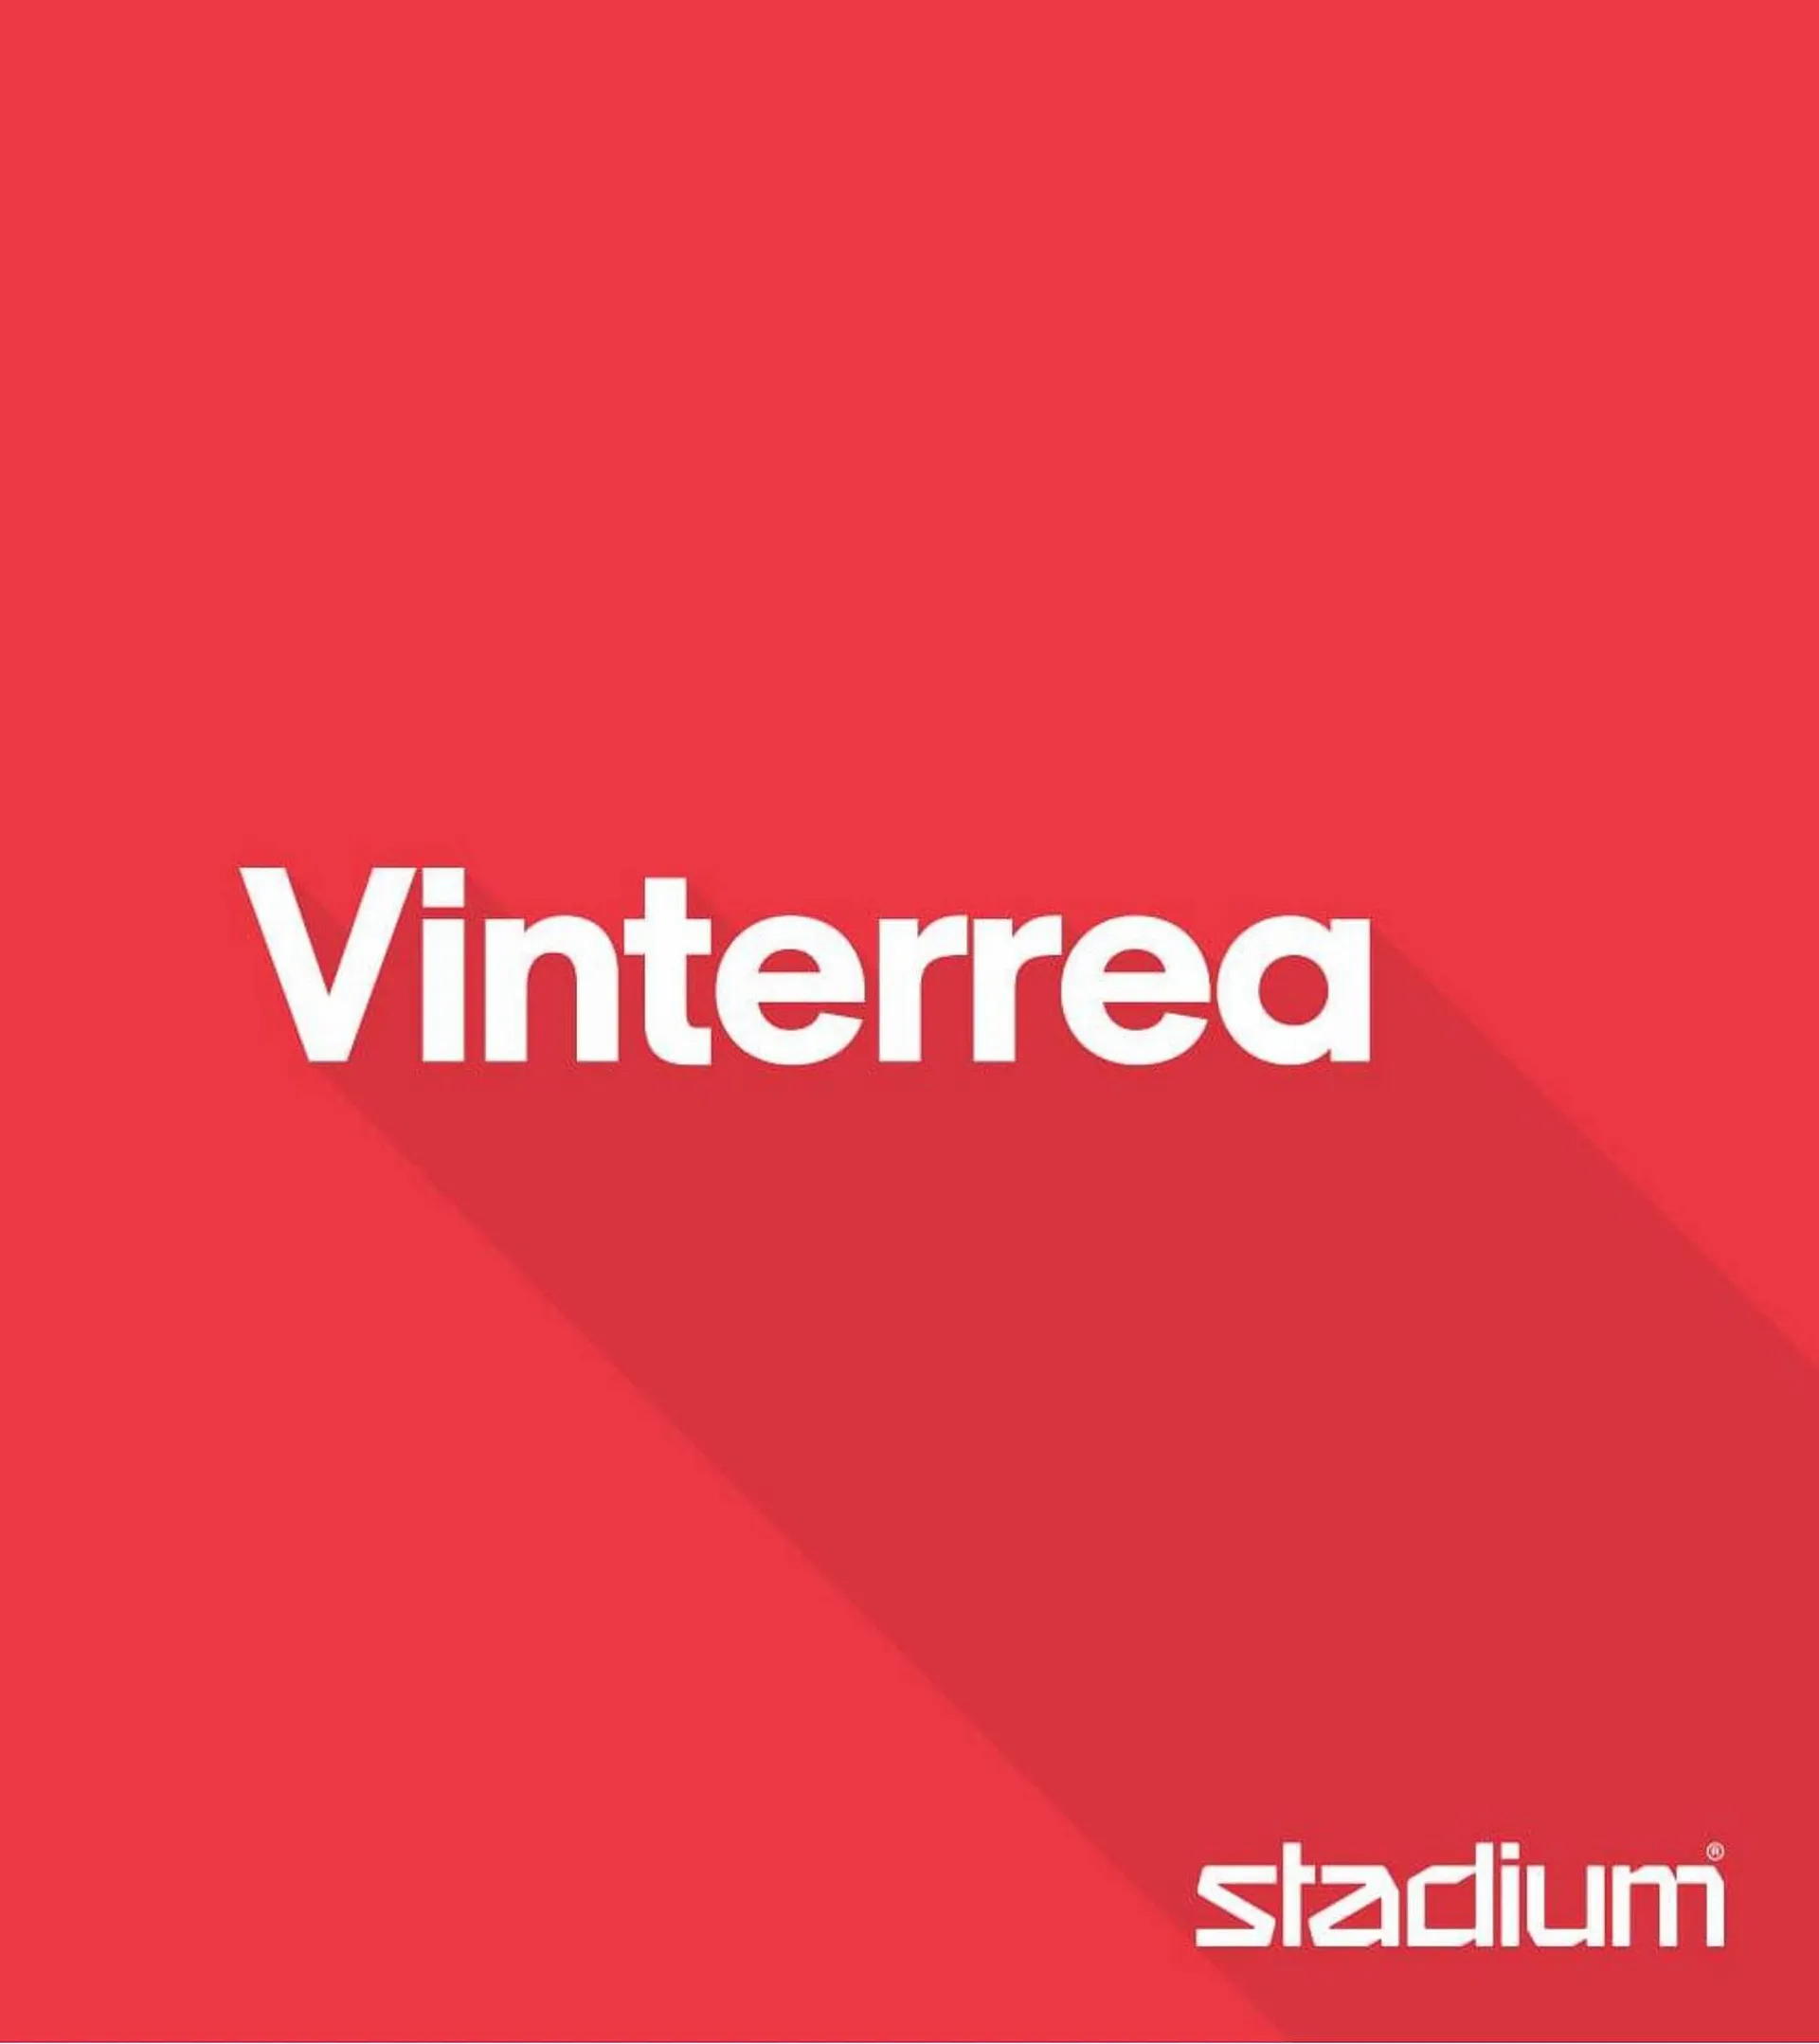 Stadium reklamblad - 1